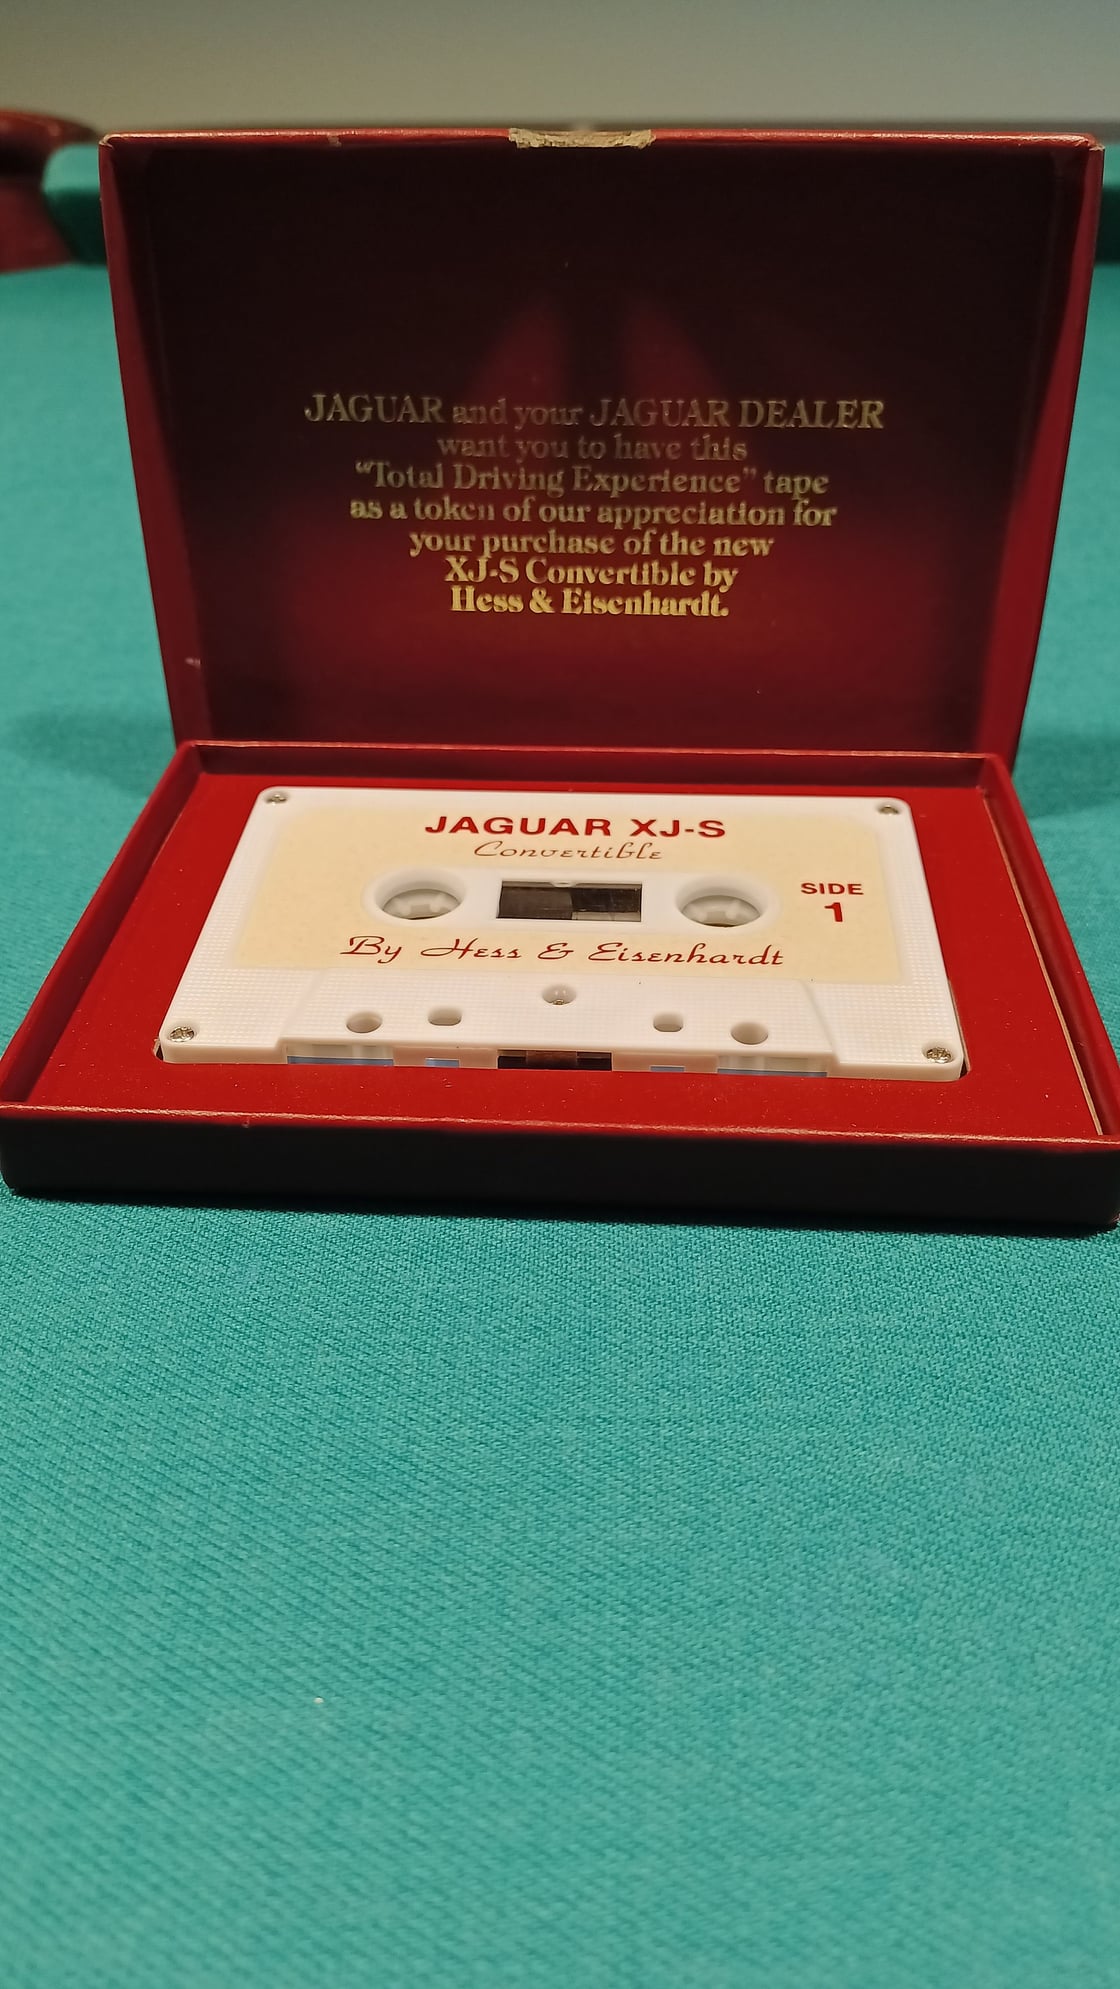 Miscellaneous - Cassette tape for Hess & Eisenhardt XJS convertible. - New - 1986 to 1988 Jaguar XJS - Saluda, NC 28773, United States